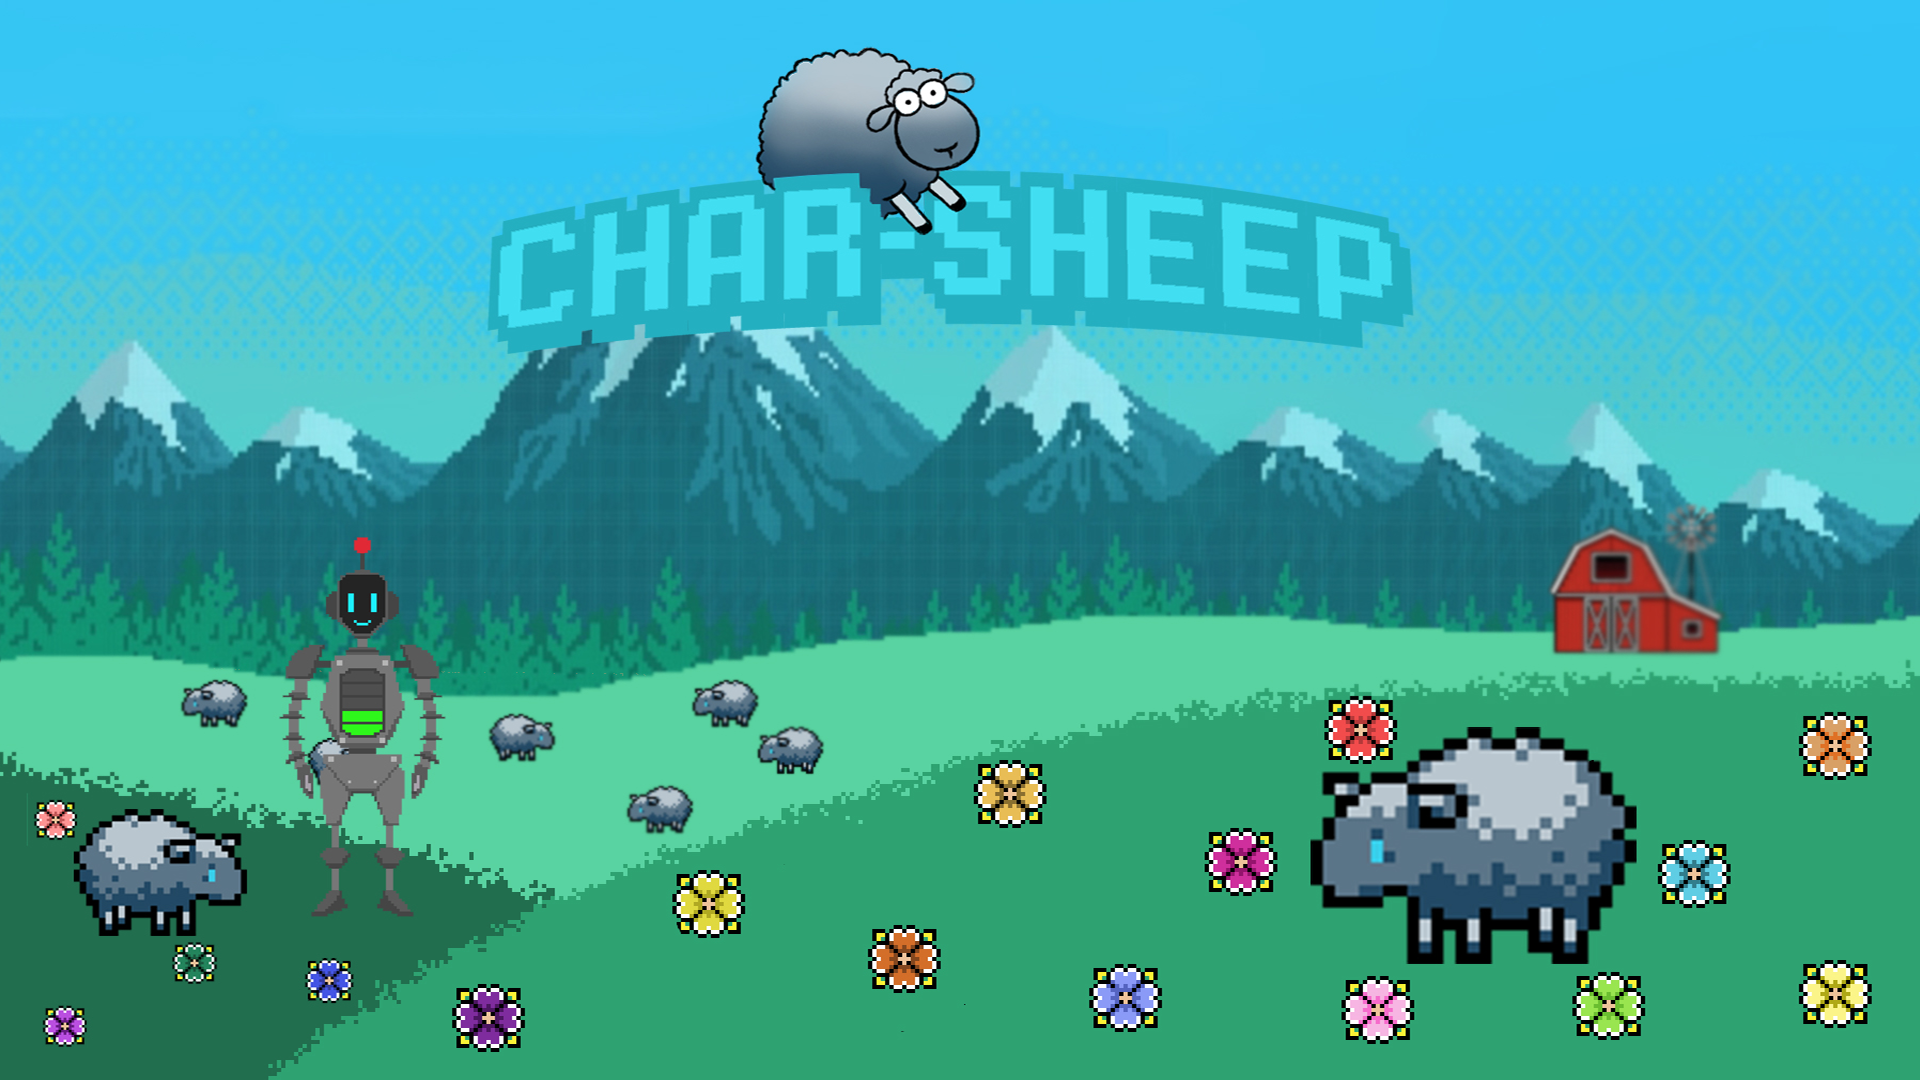 Char-Sheep